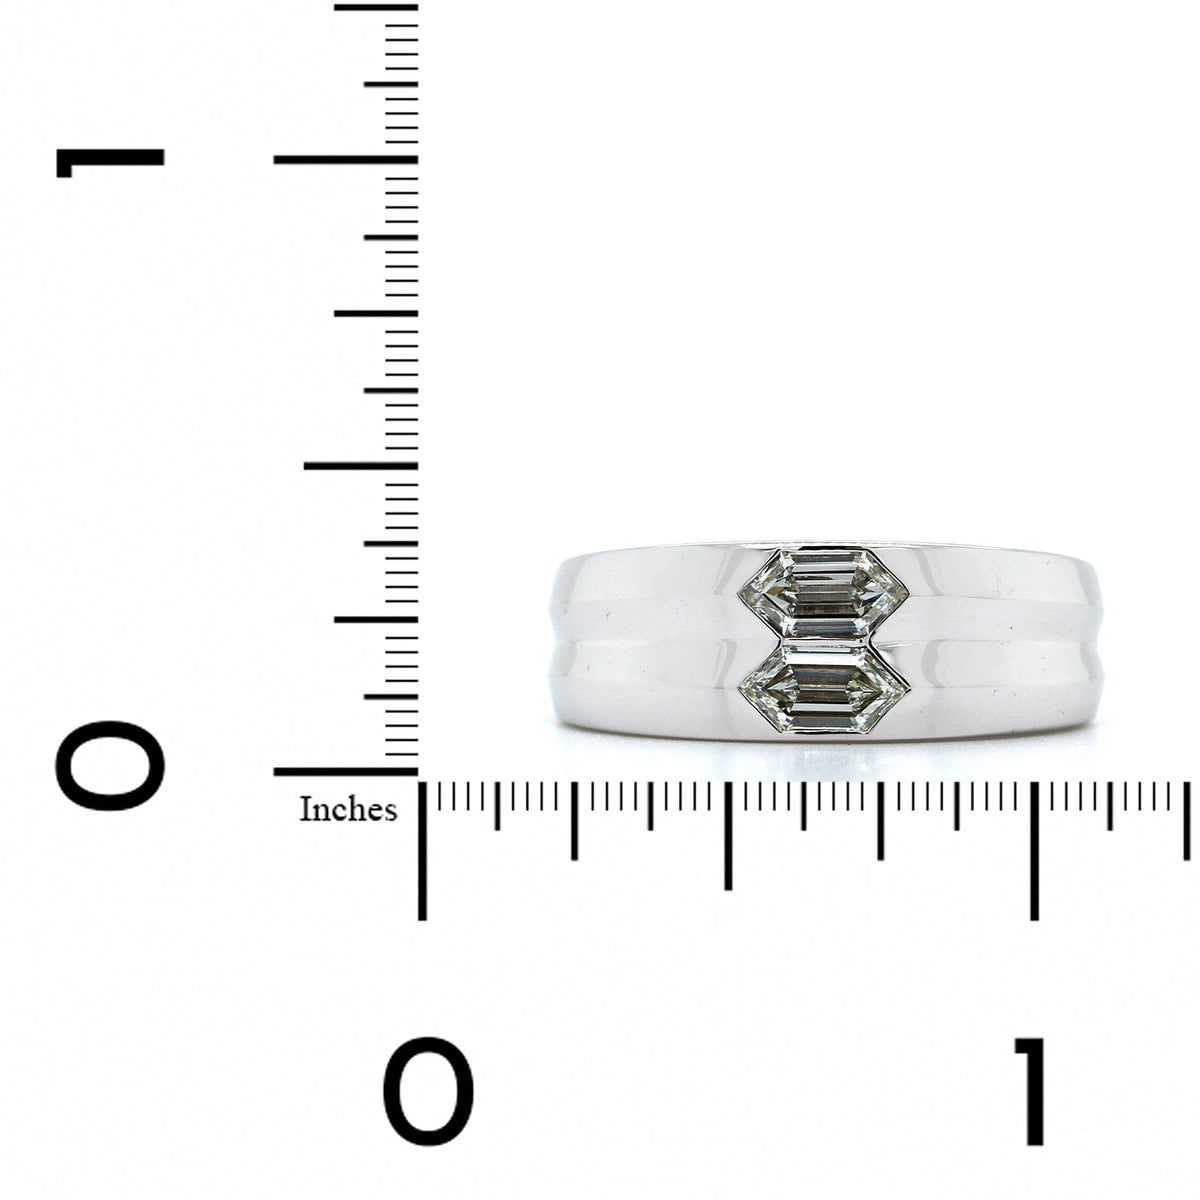 18K White Gold Hexagonal Cut Diamond 2 Stone Ring